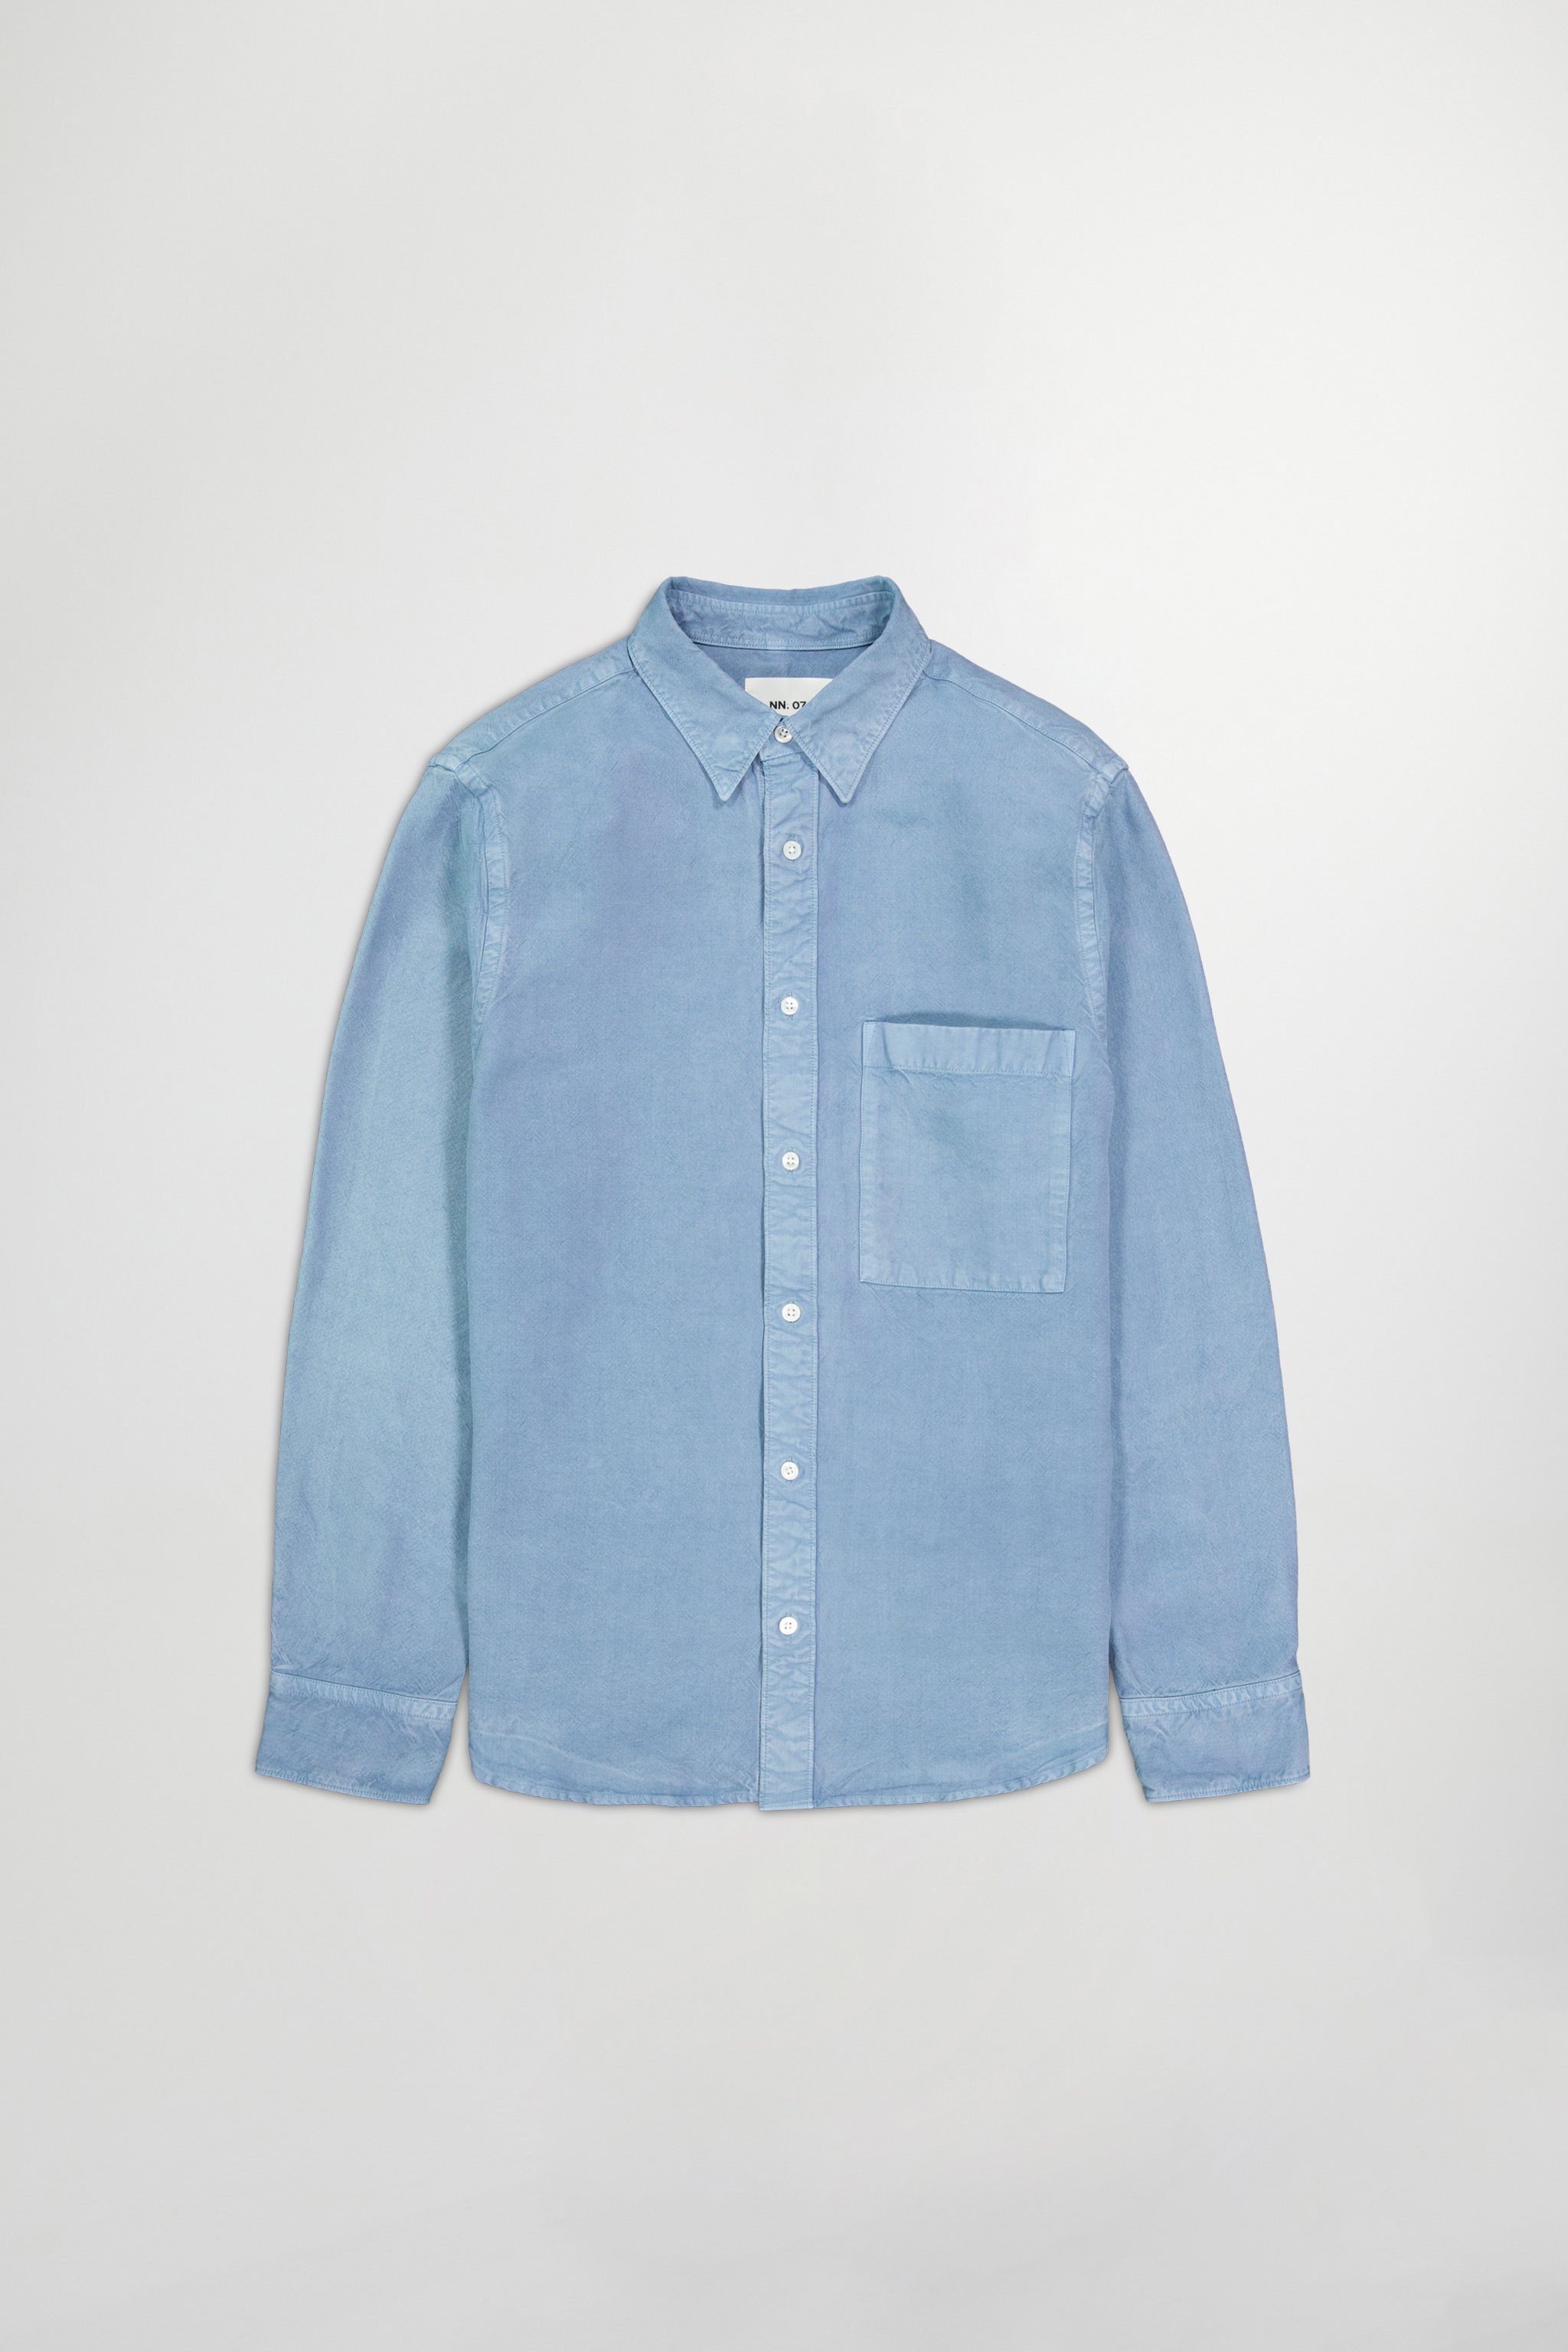 Cohen 5213 men's shirt - Blue - Buy online at